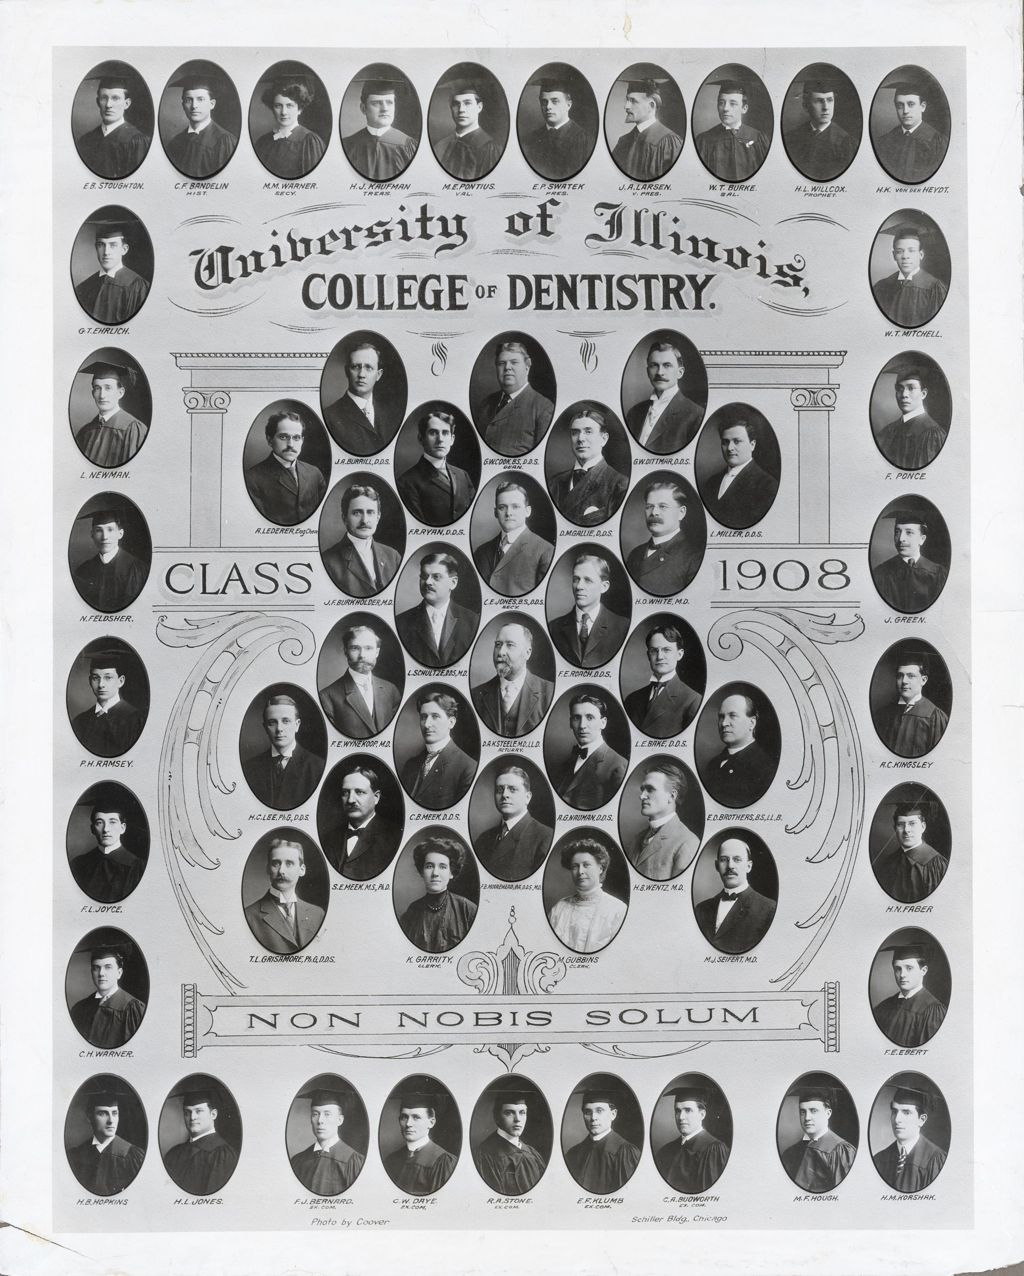 1908 graduating class, University of Illinois College of Dentistry